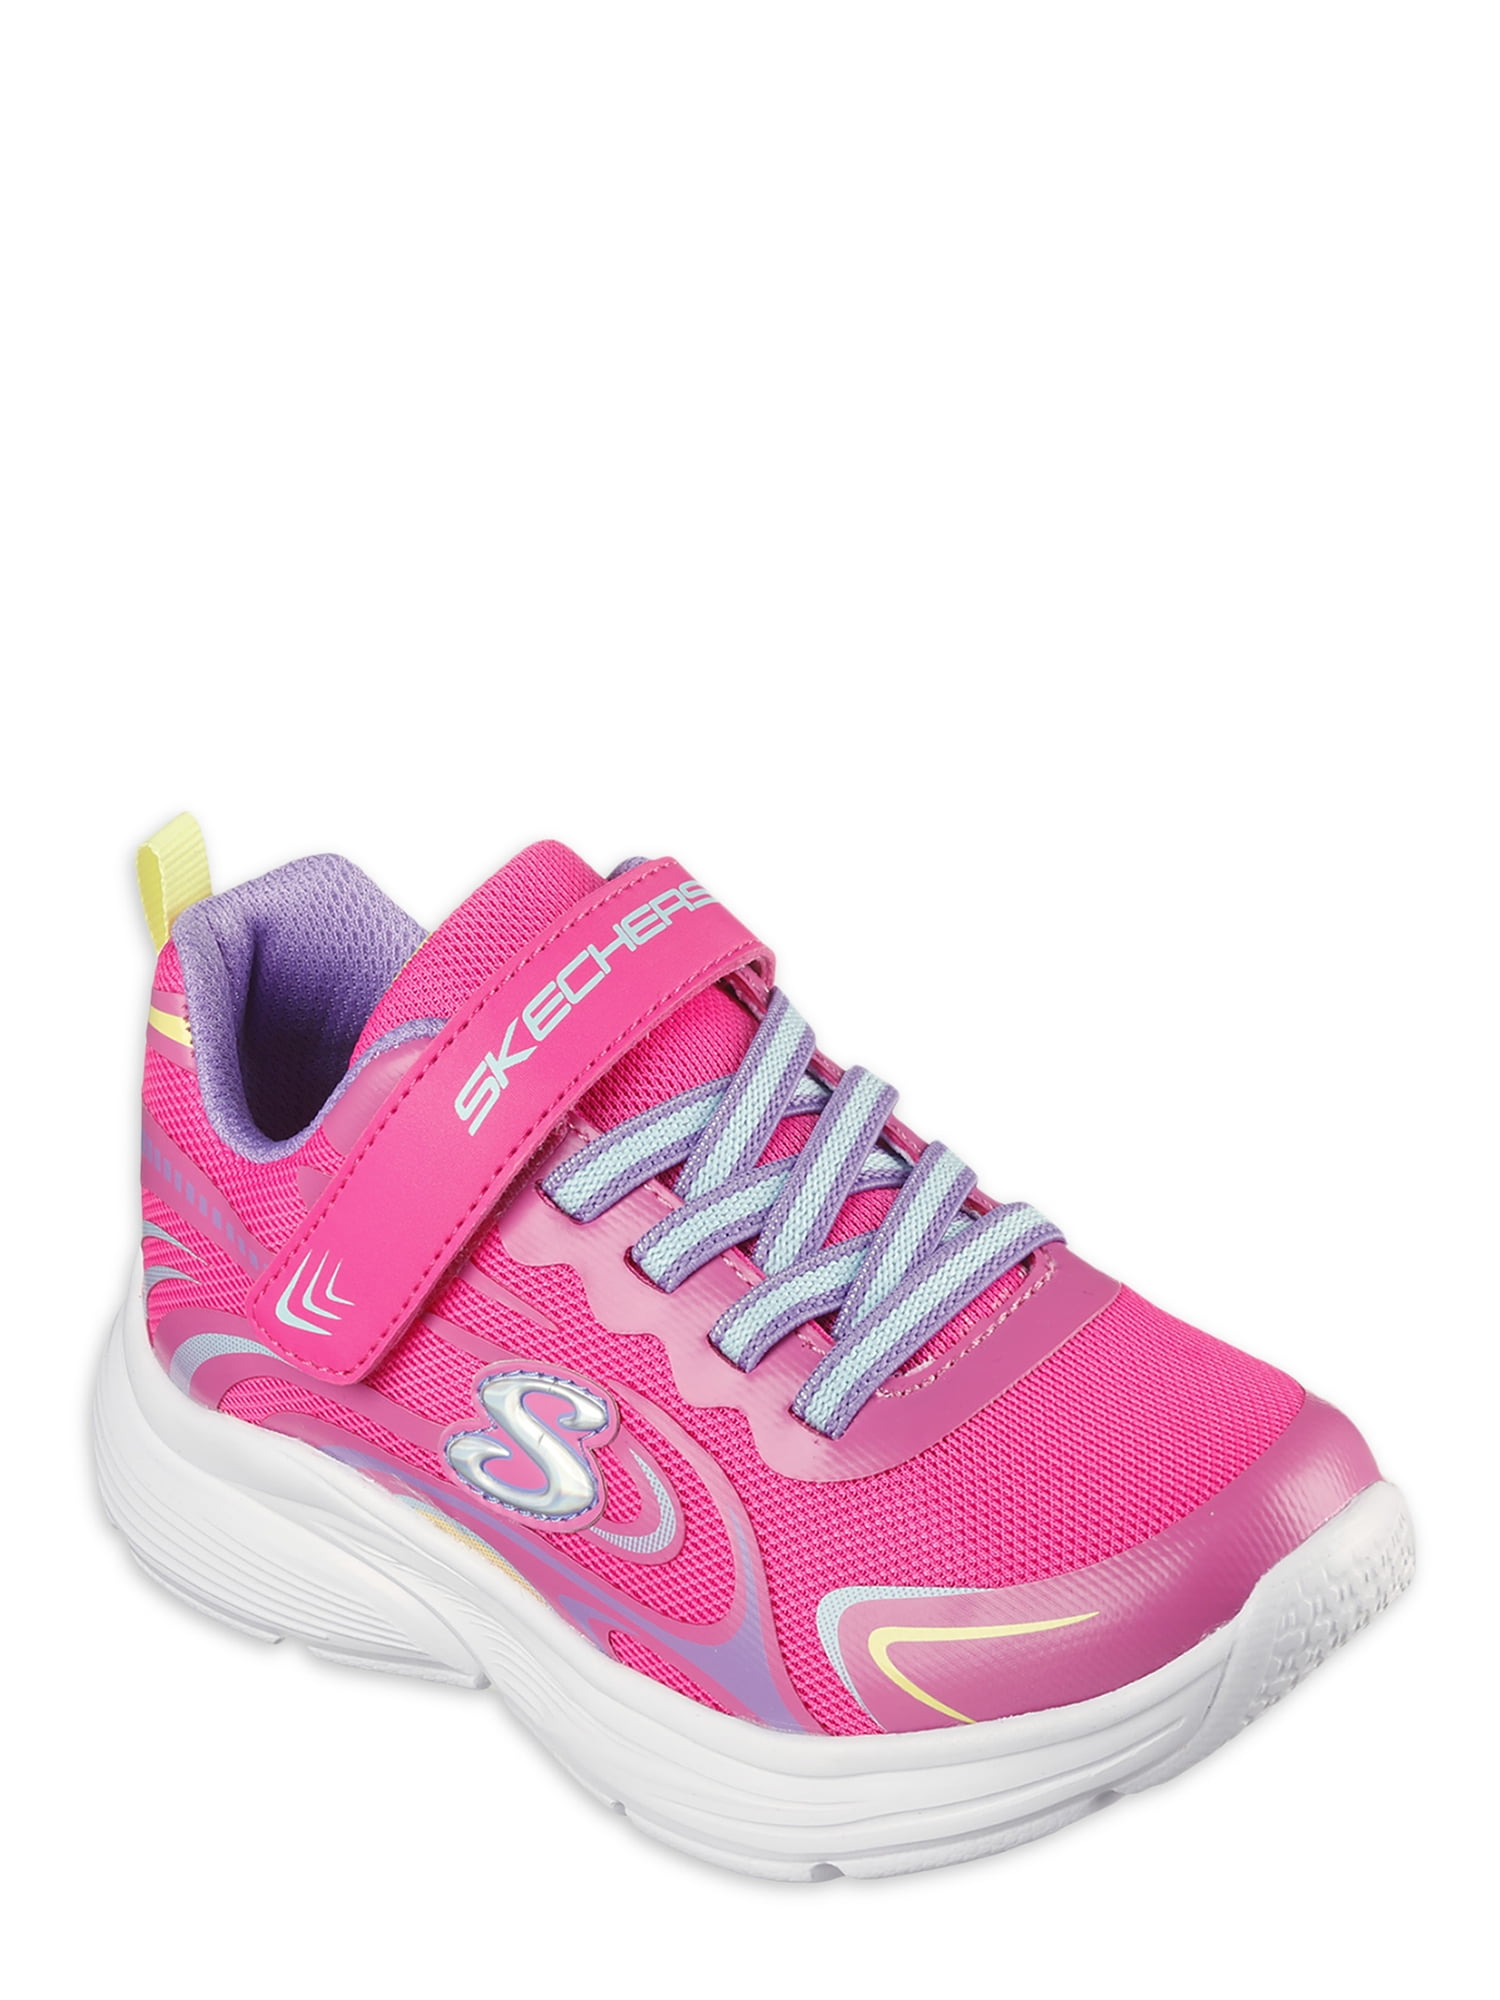 SKECHERS Lights Shoes for Boys Sizes (4+) | Mercari